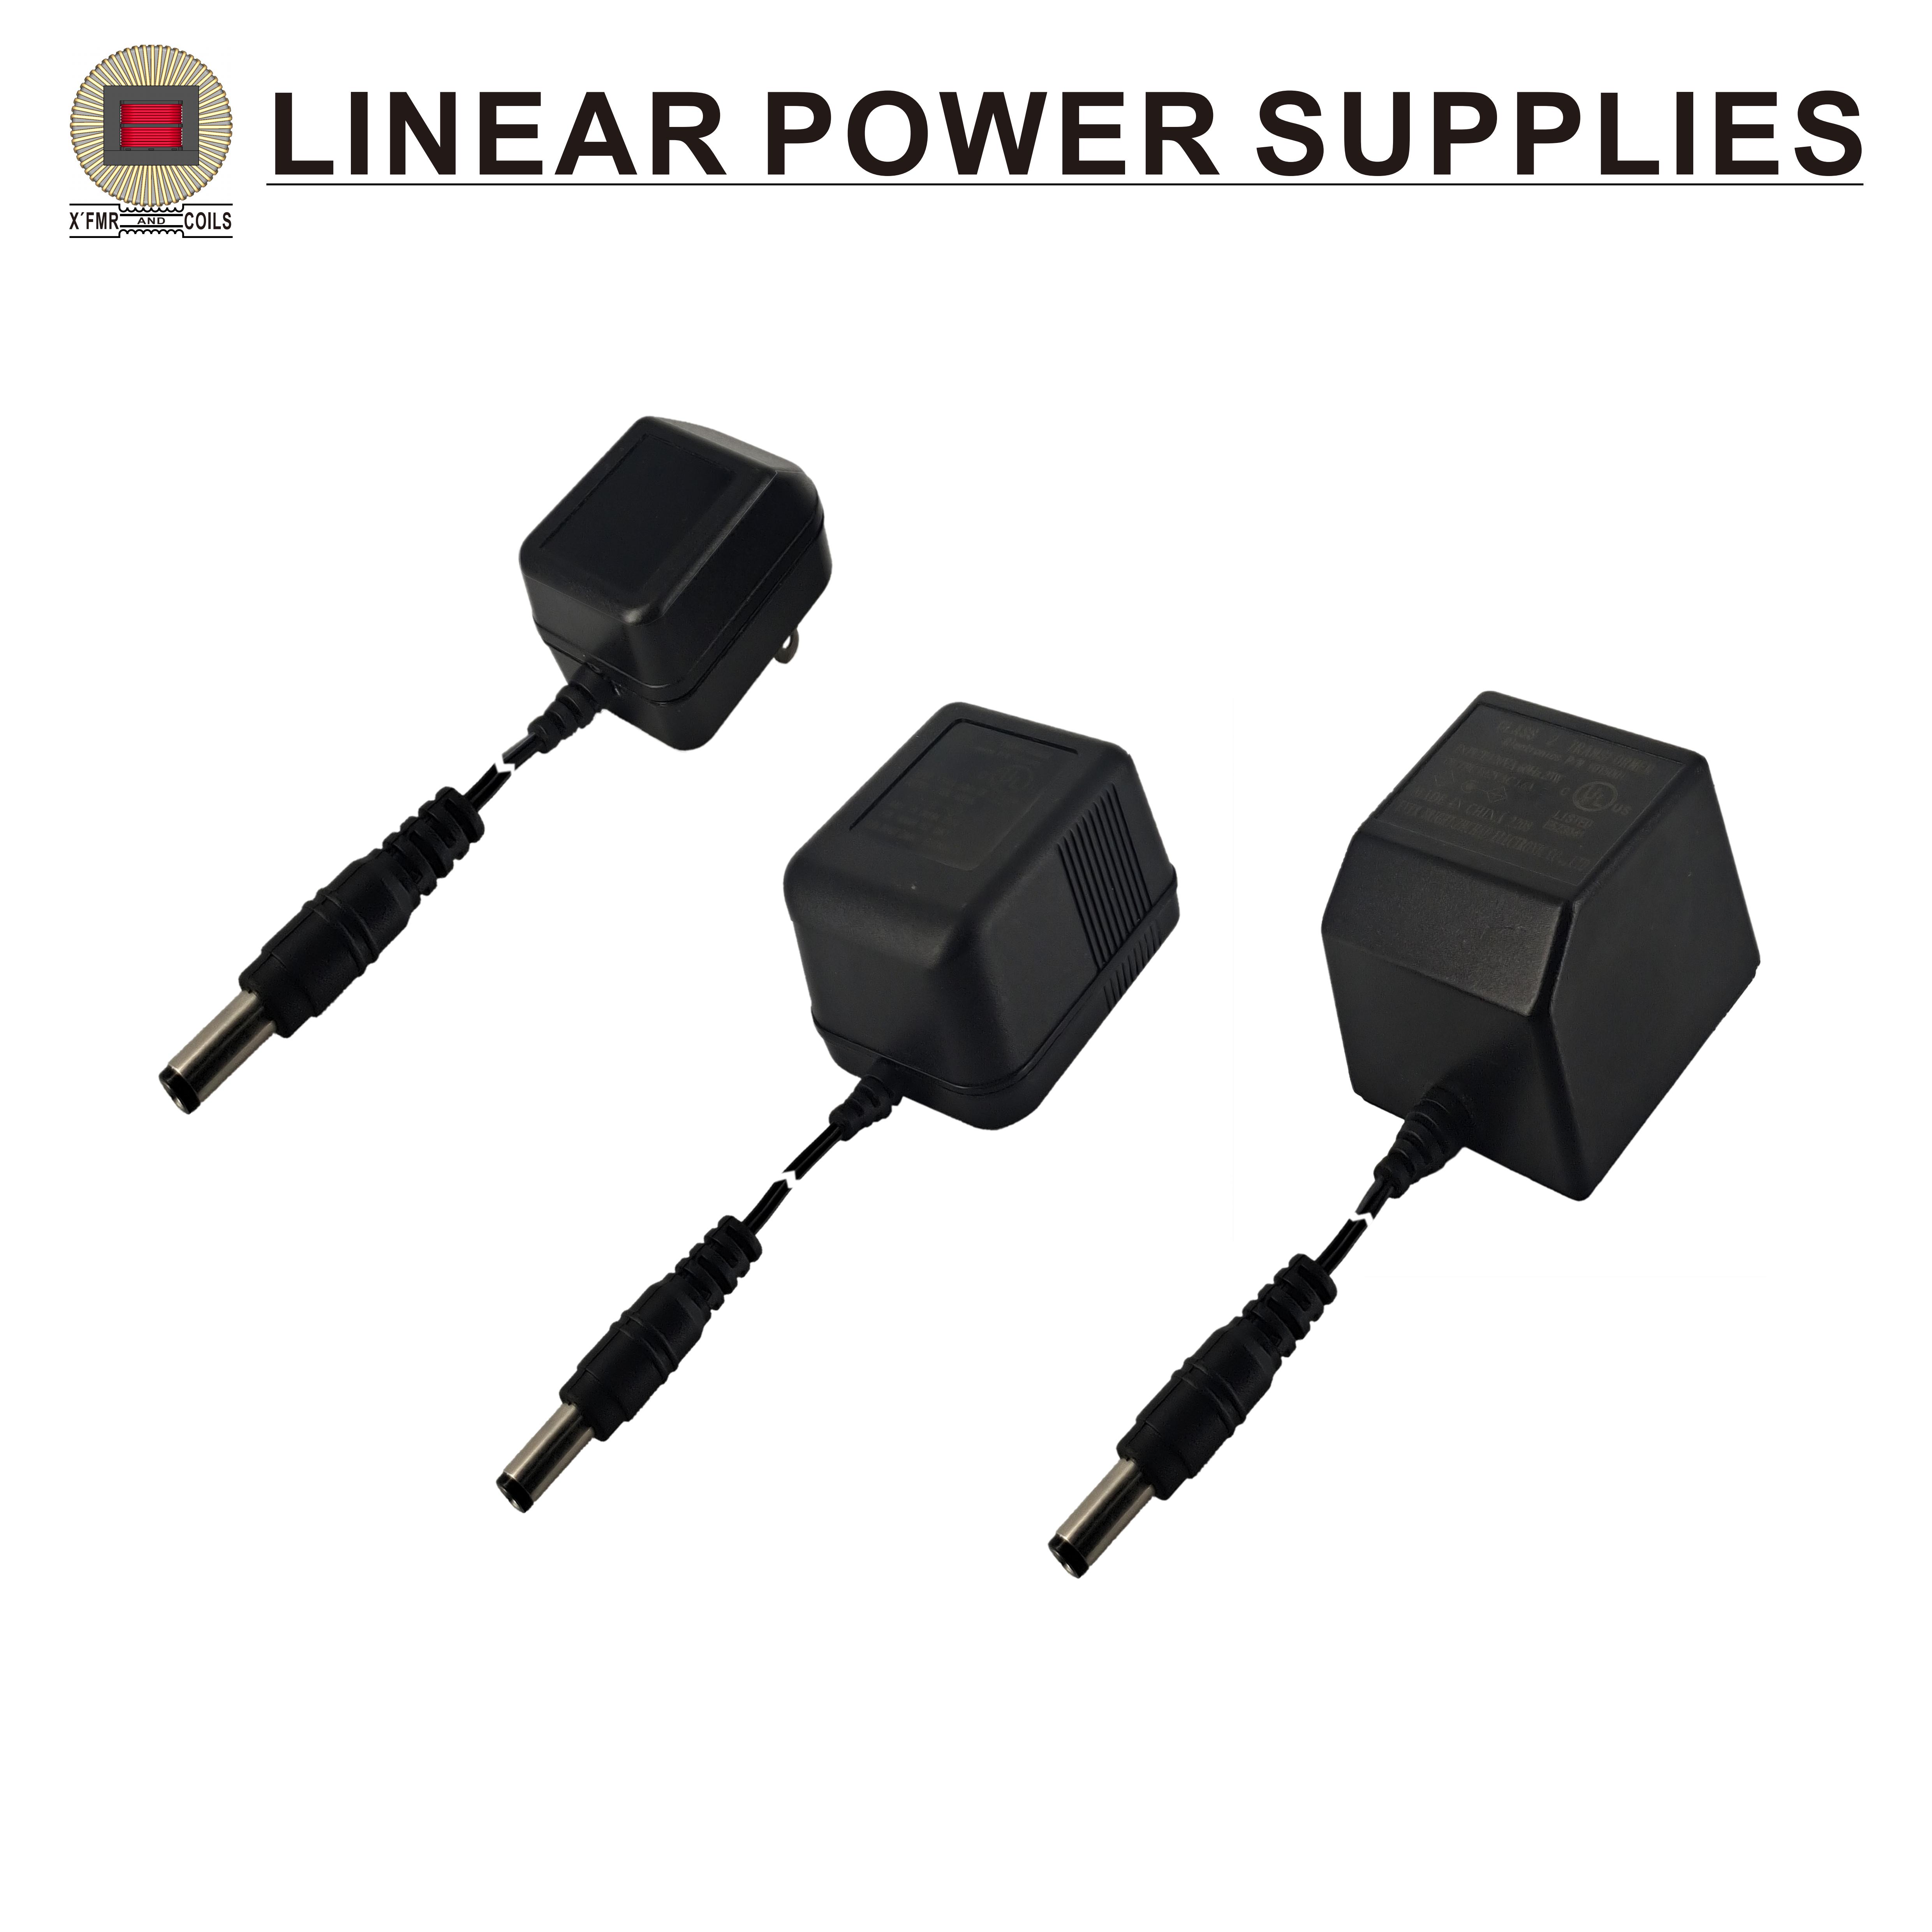 Linear Power Supplies LPS-02 Series